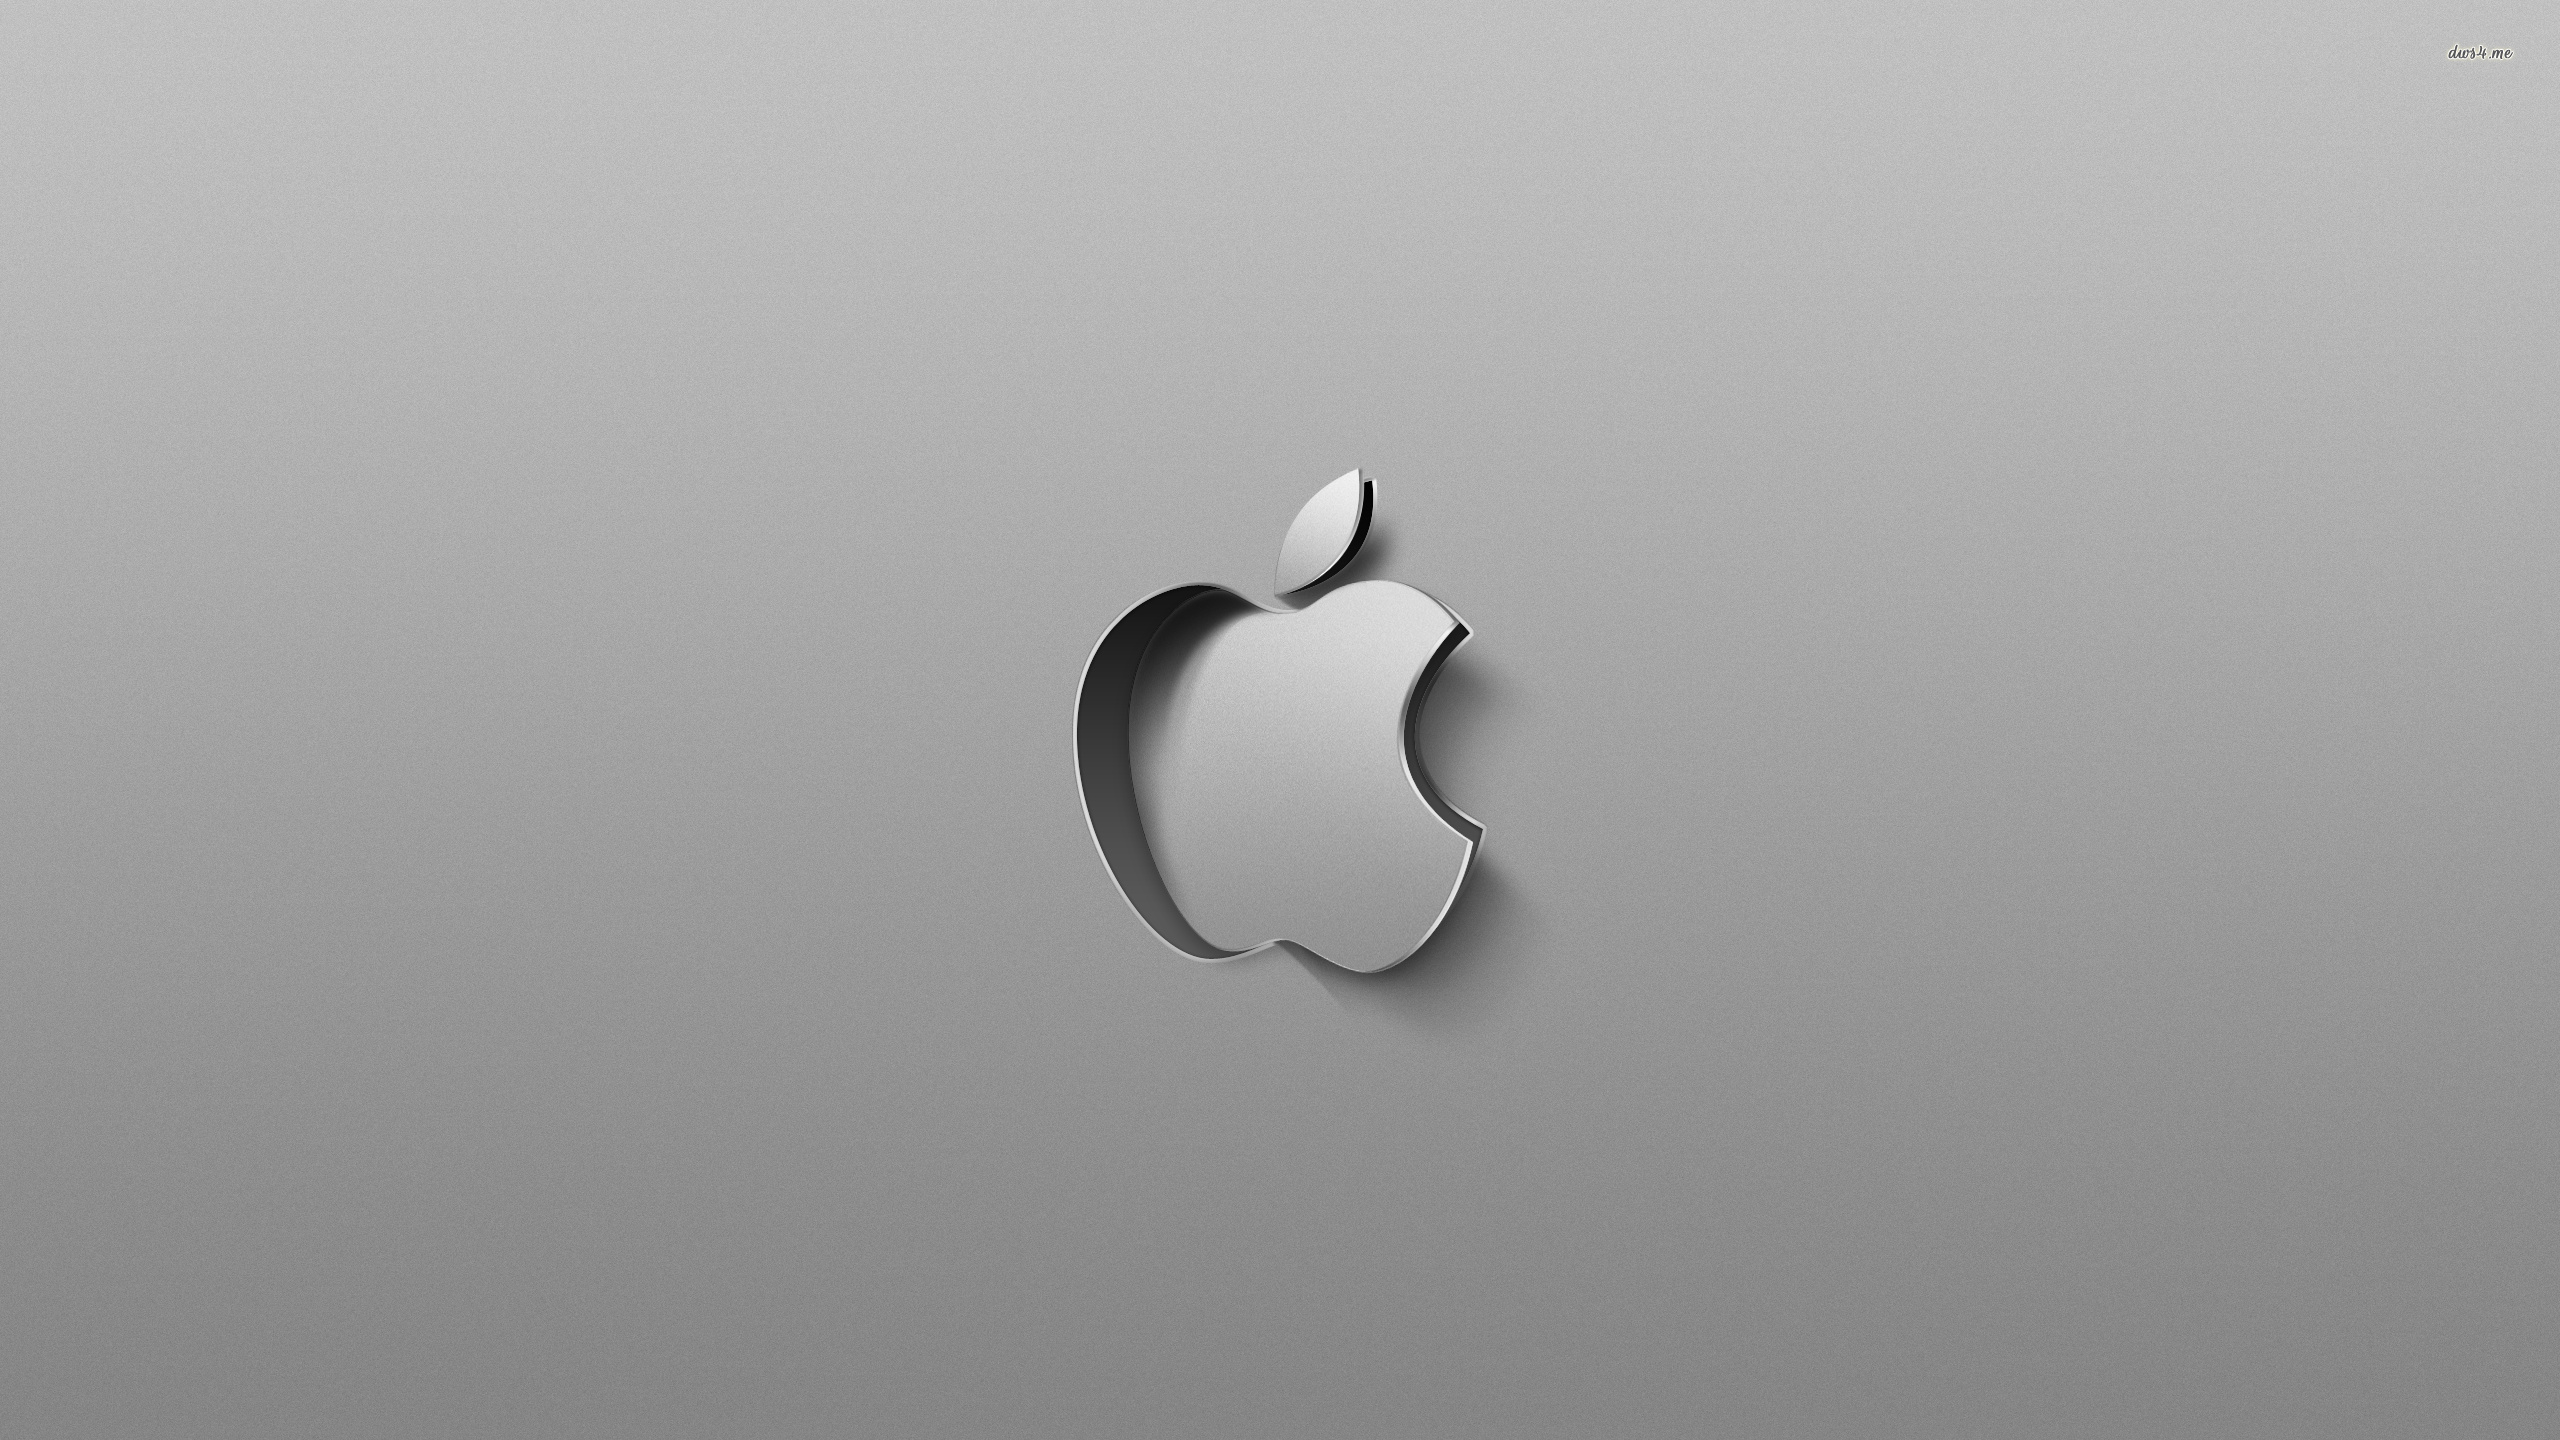 Sleek iMac logo, Apple's iconic symbol, Stylish and minimalistic, Mac love, 2560x1440 HD Desktop